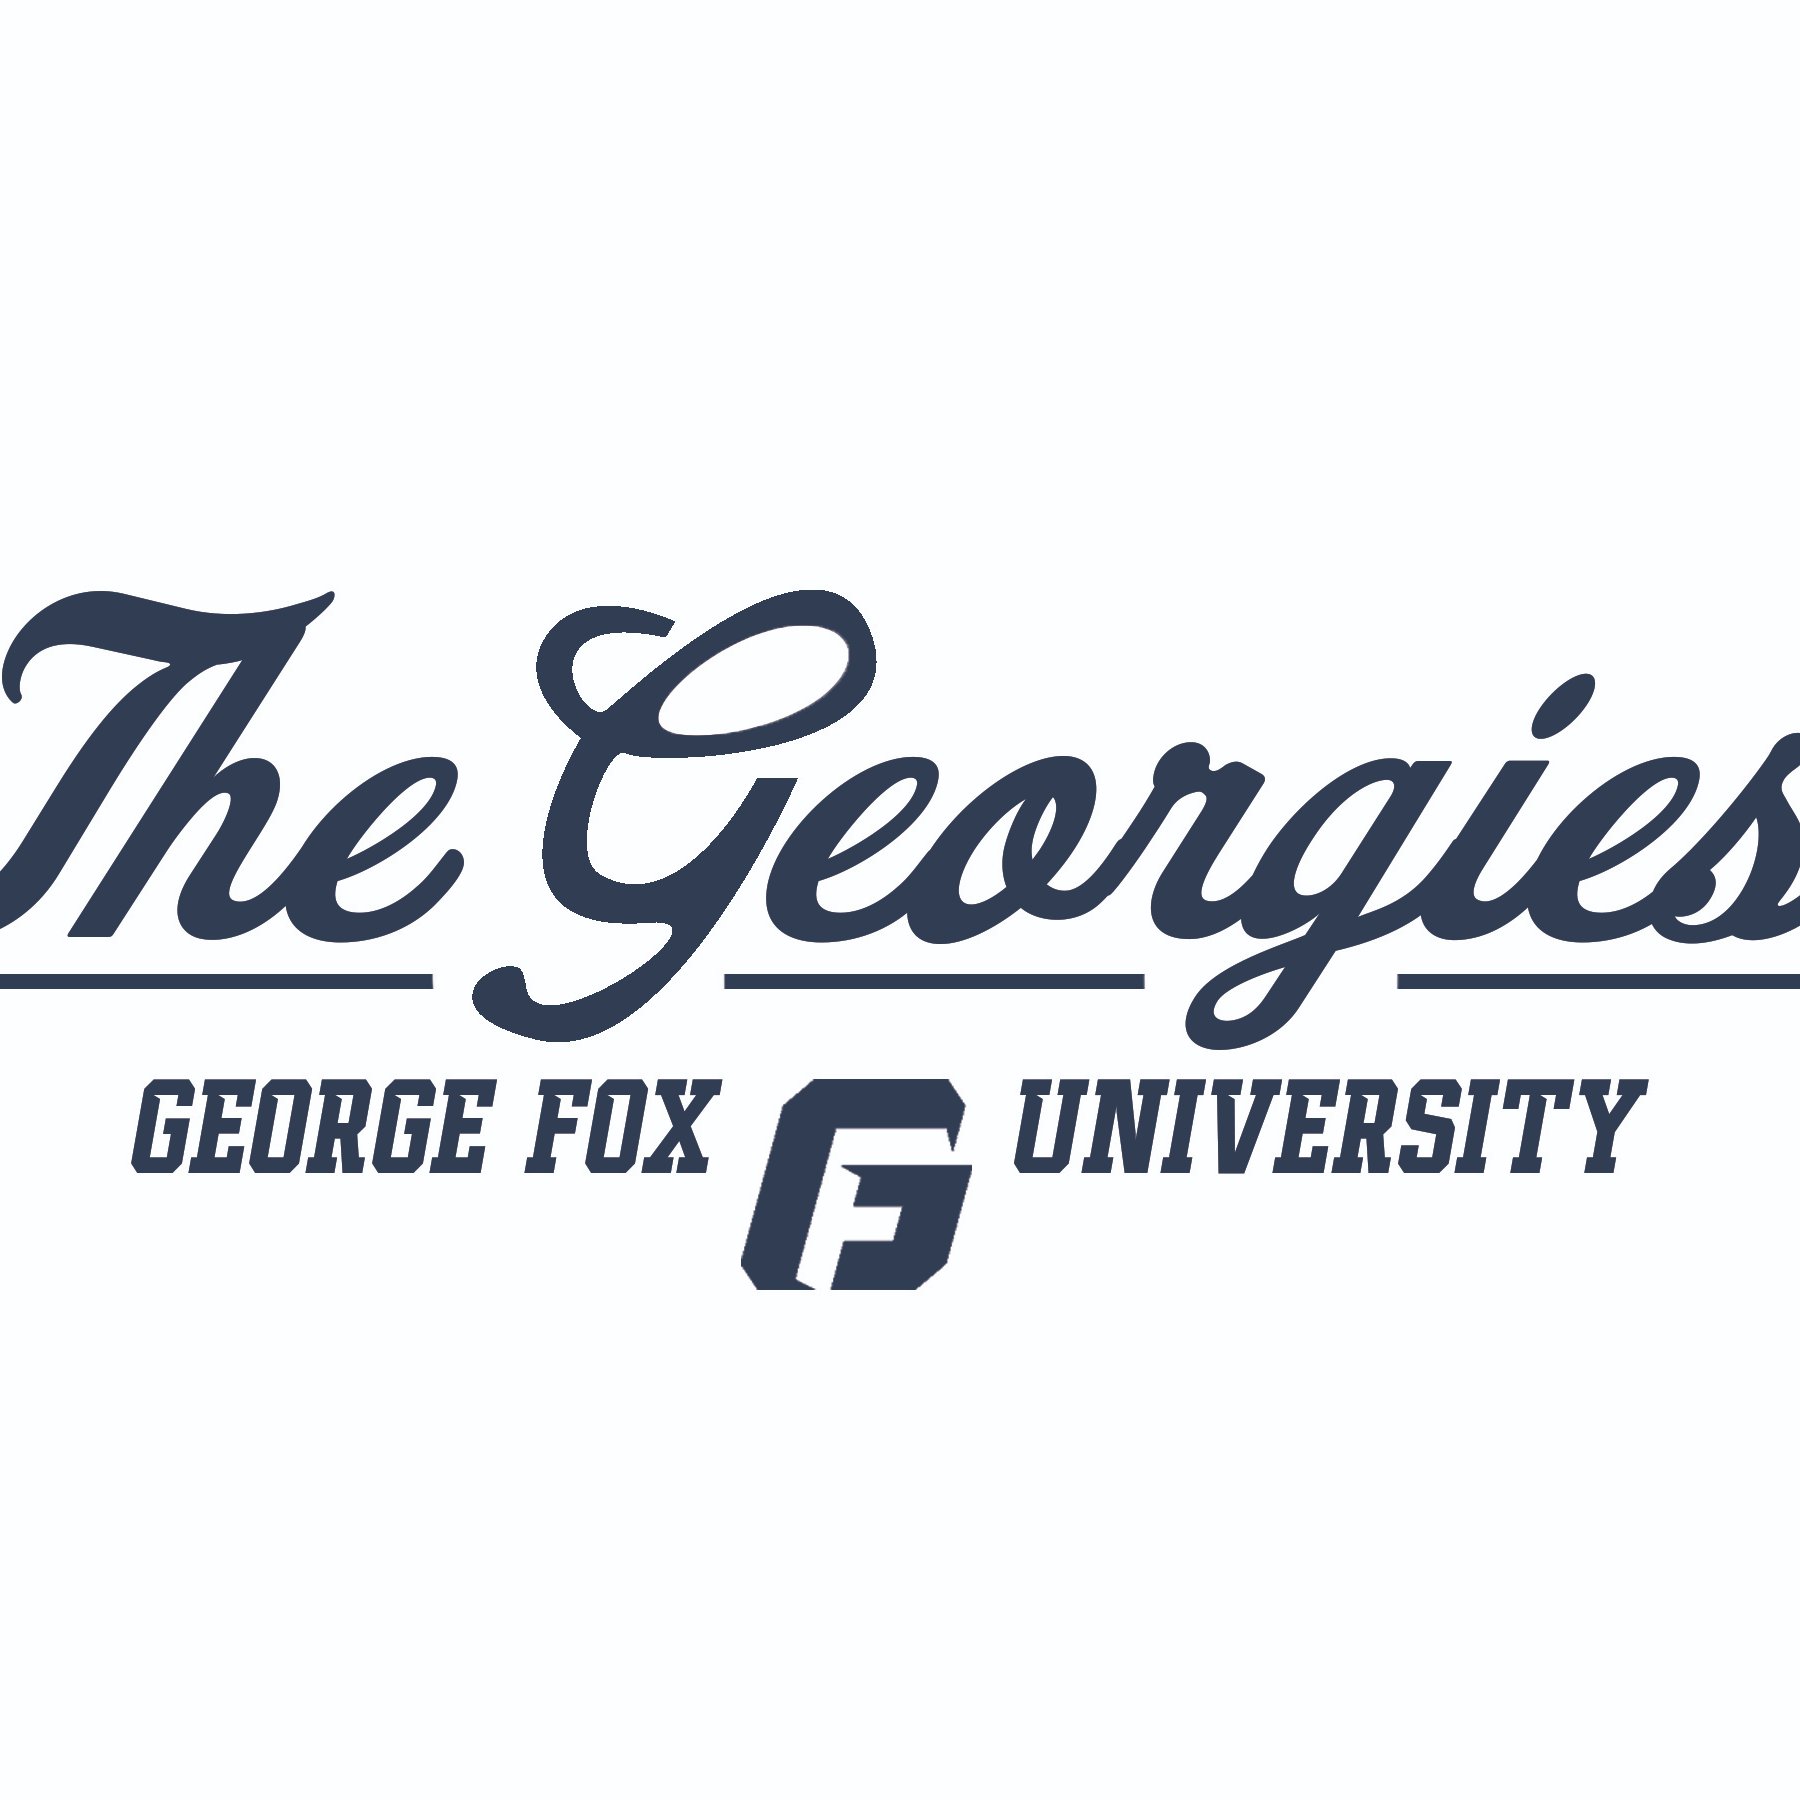 Georgies 2018! April 12th at 6:45 p.m. BE THERE!